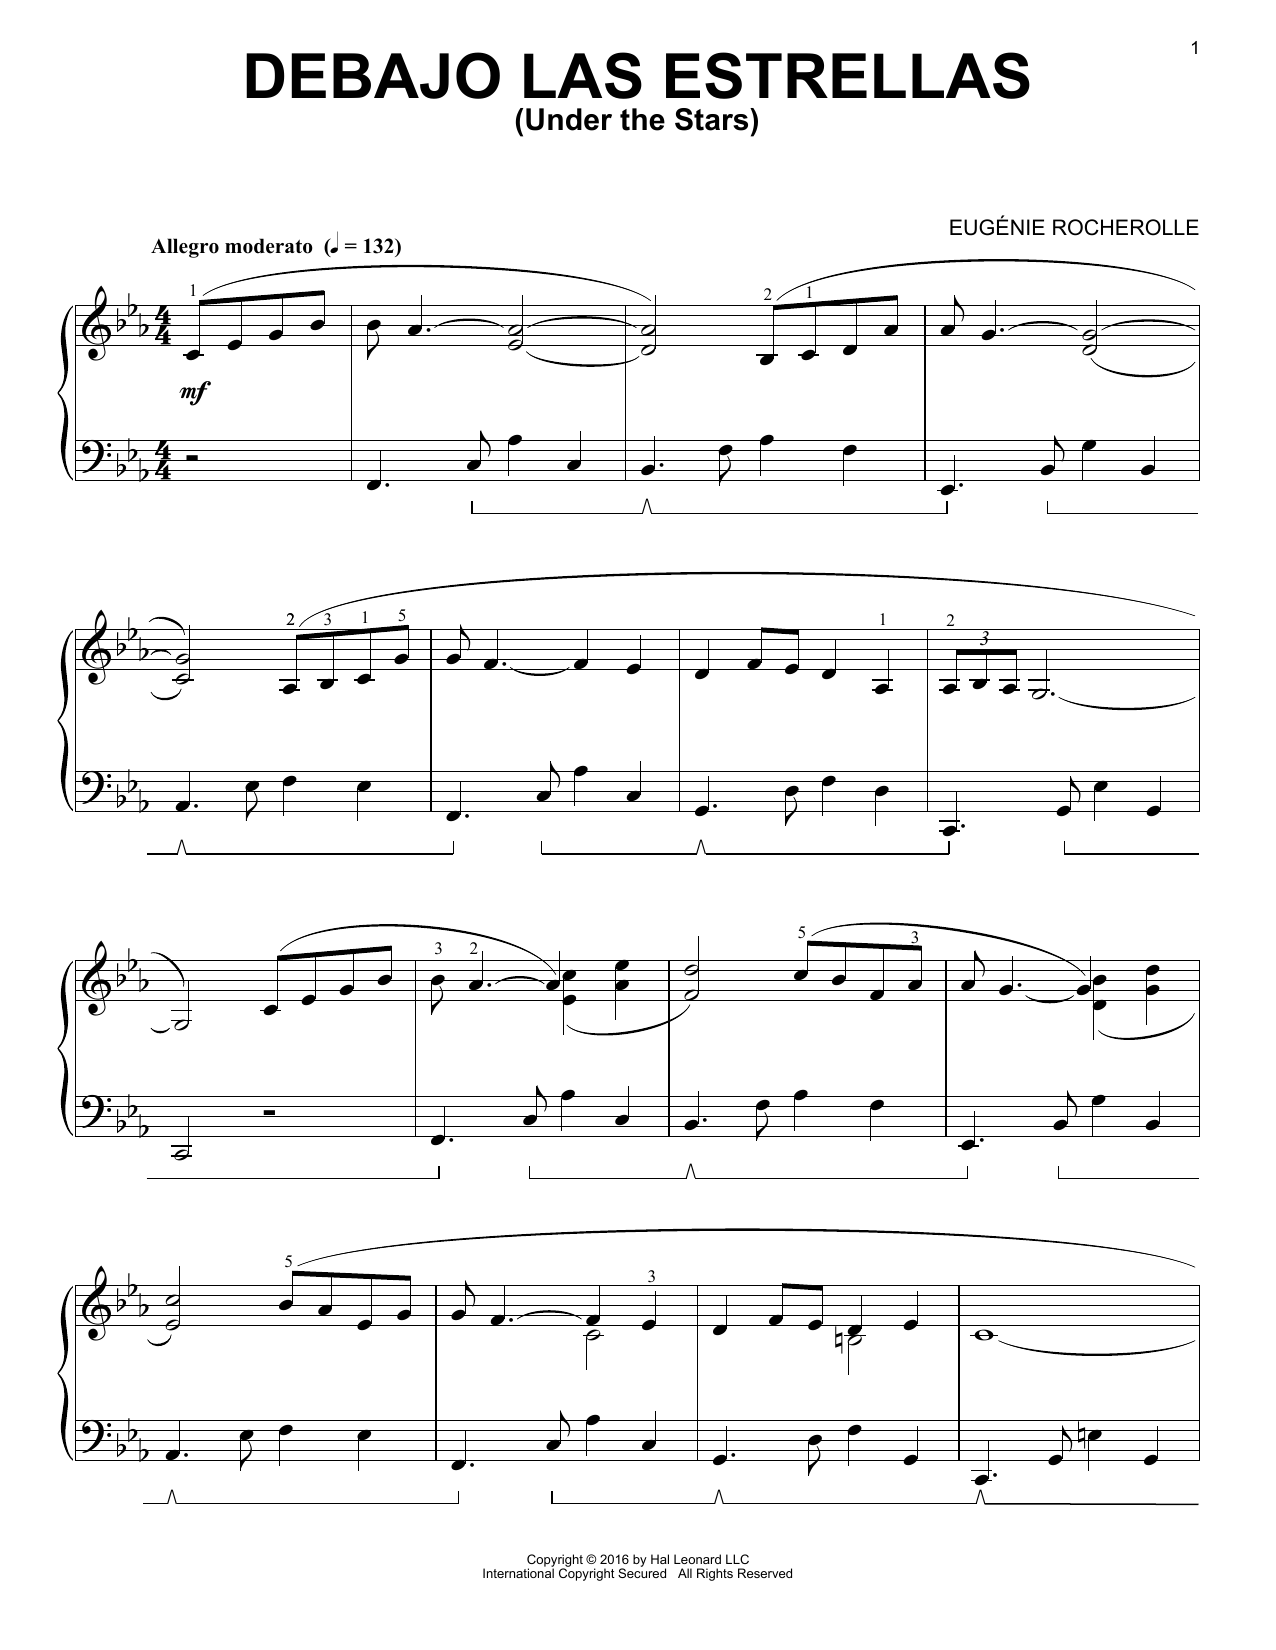 Download Eugénie Rocherolle Debajo Las Estrellas Sheet Music and learn how to play Piano PDF digital score in minutes